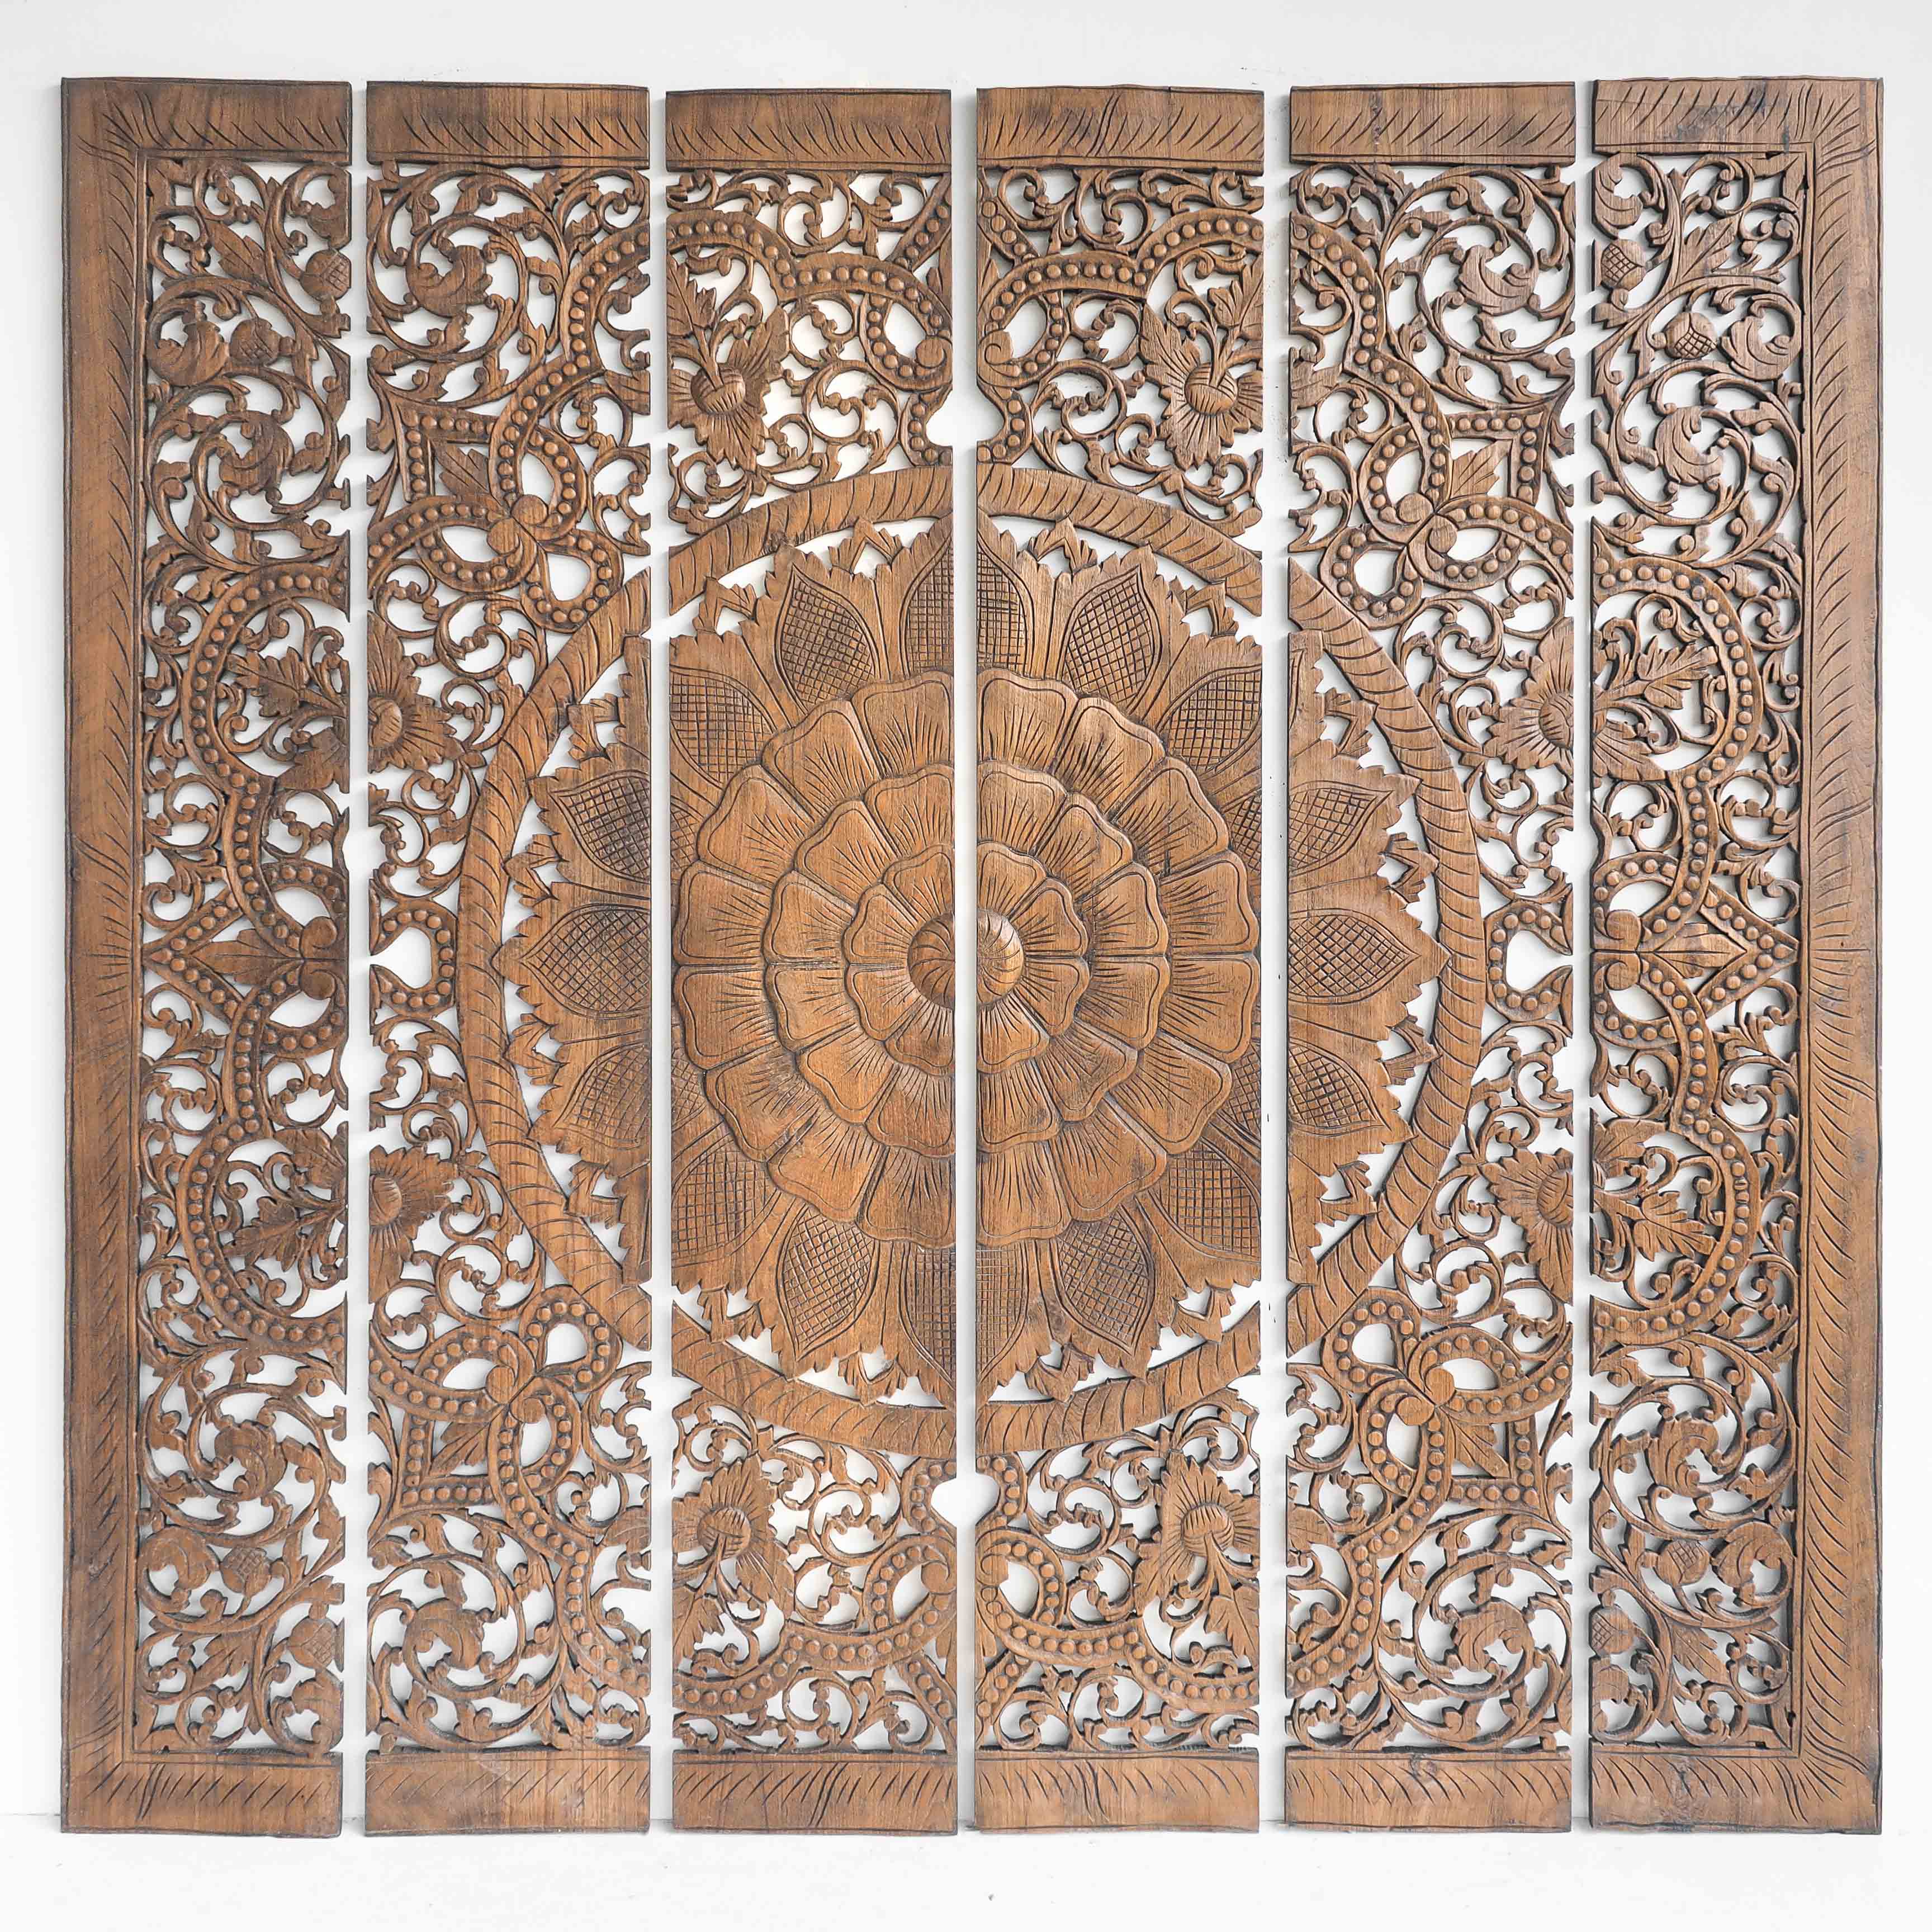 Buy Mandala Carved Wood Wall Art Panel Grey Headboard Online